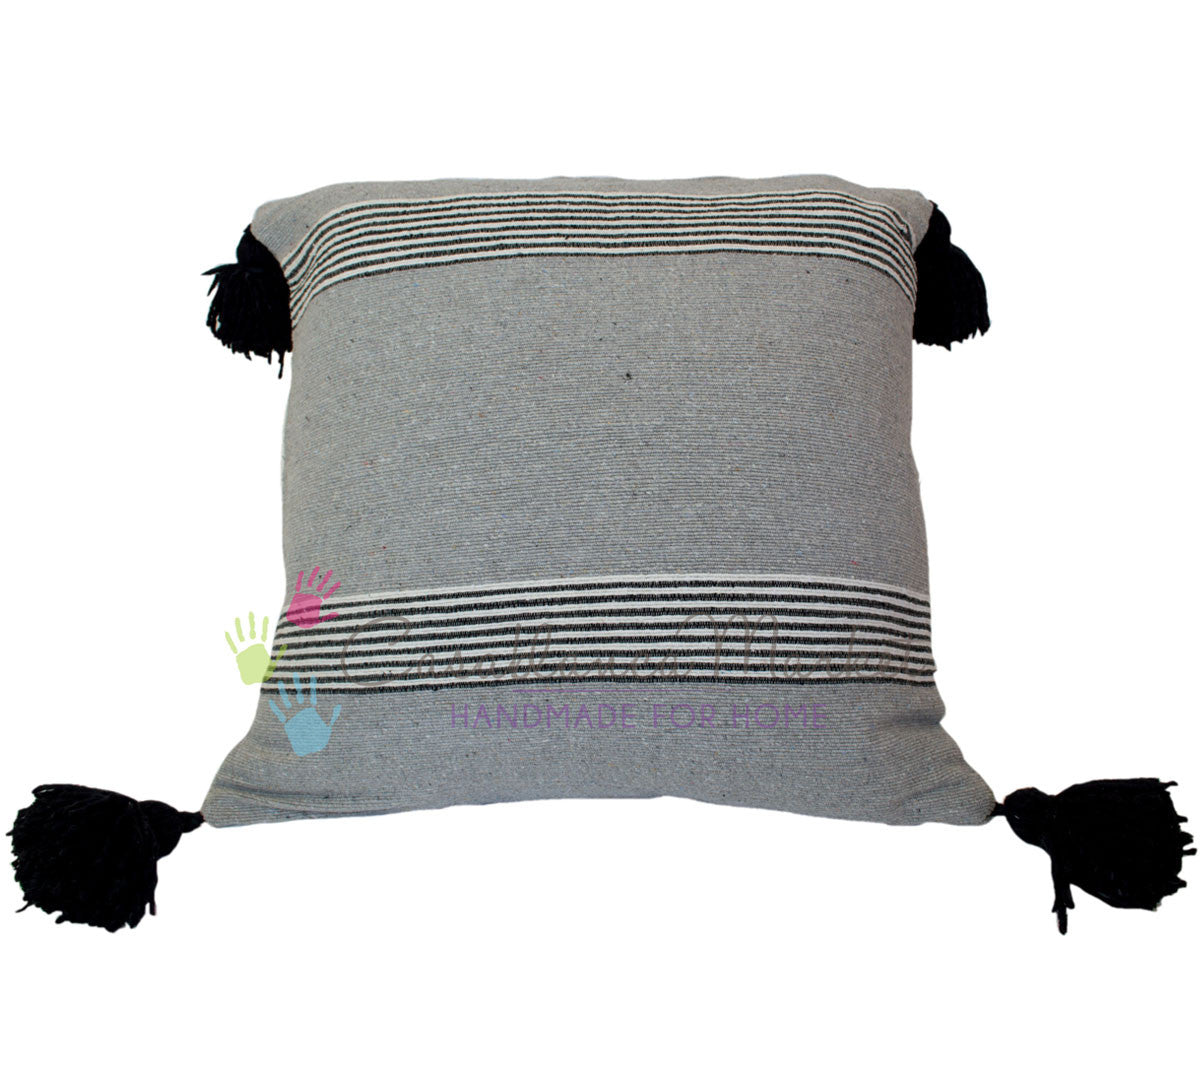 Moroccan Pom Pom Pillow, Black and White Stripes on Gray